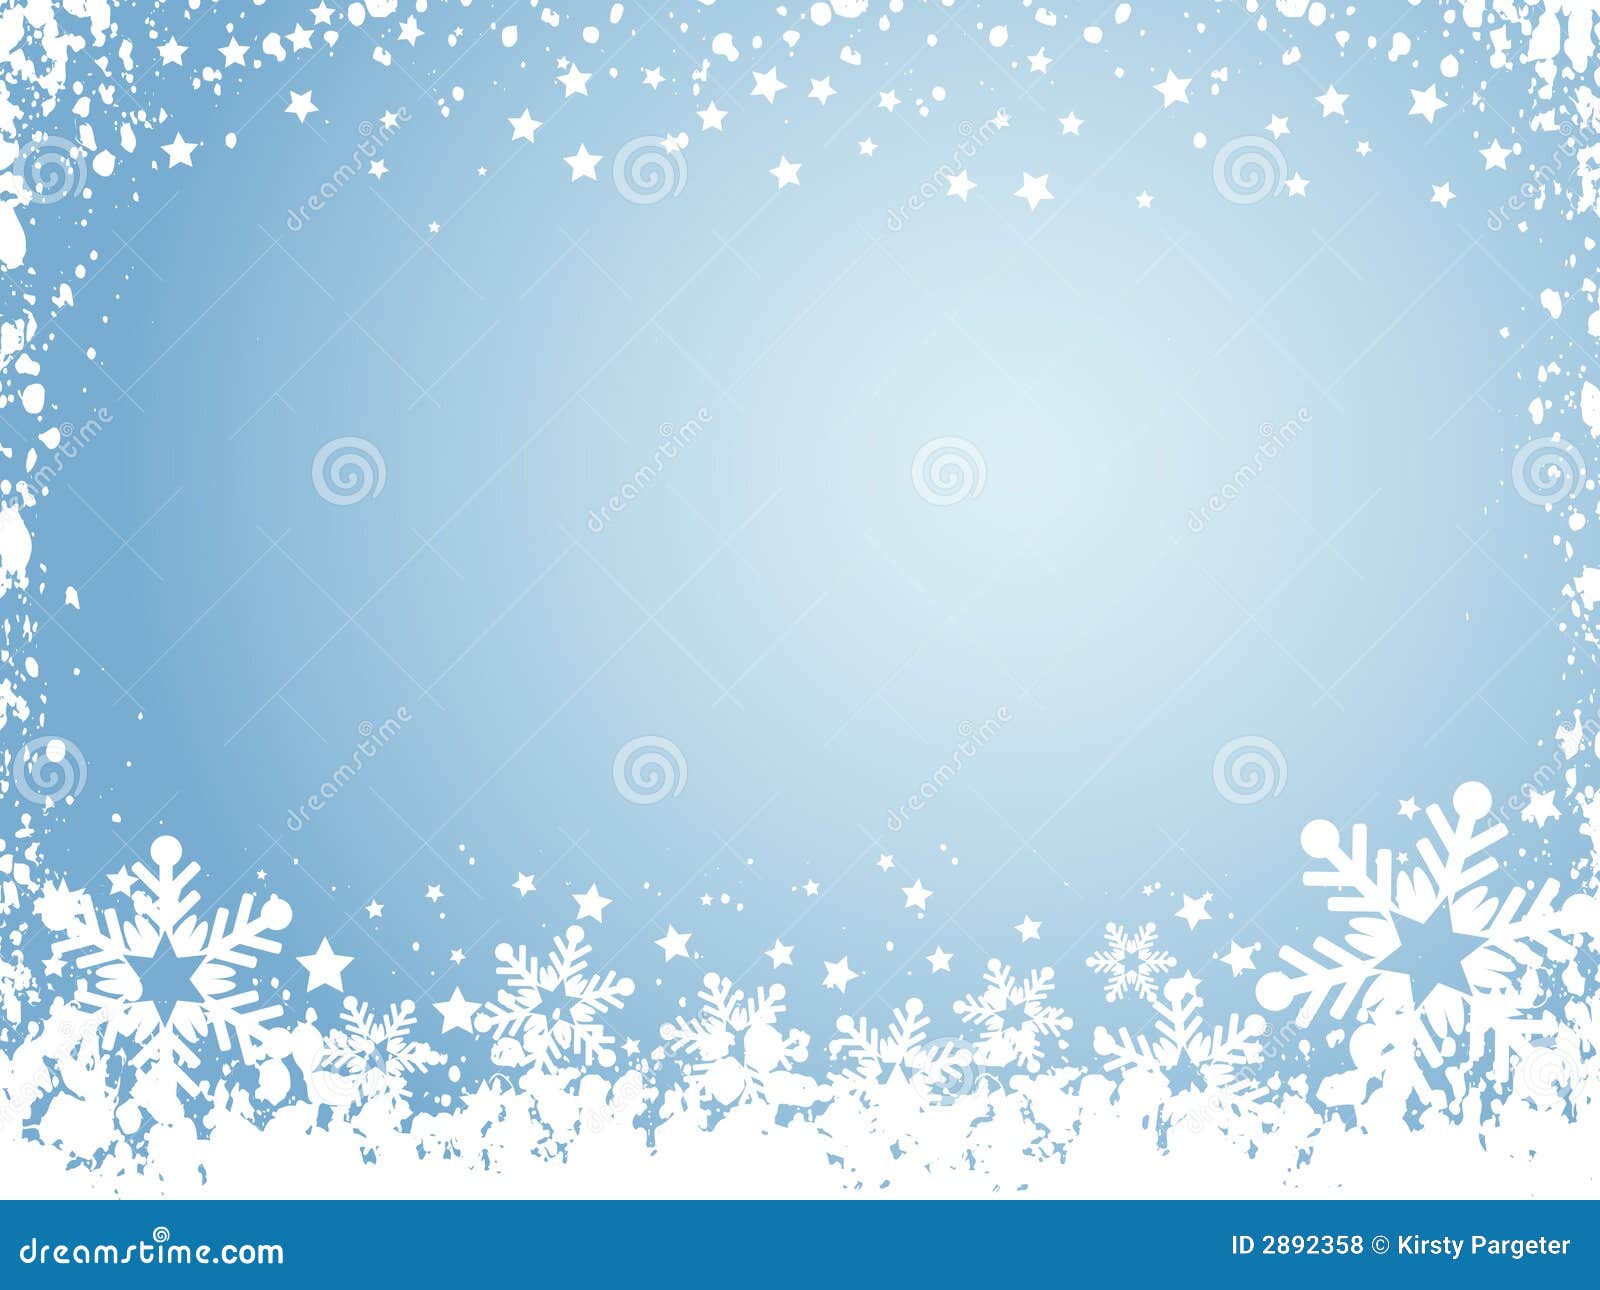 free clipart snowflakes background - photo #24